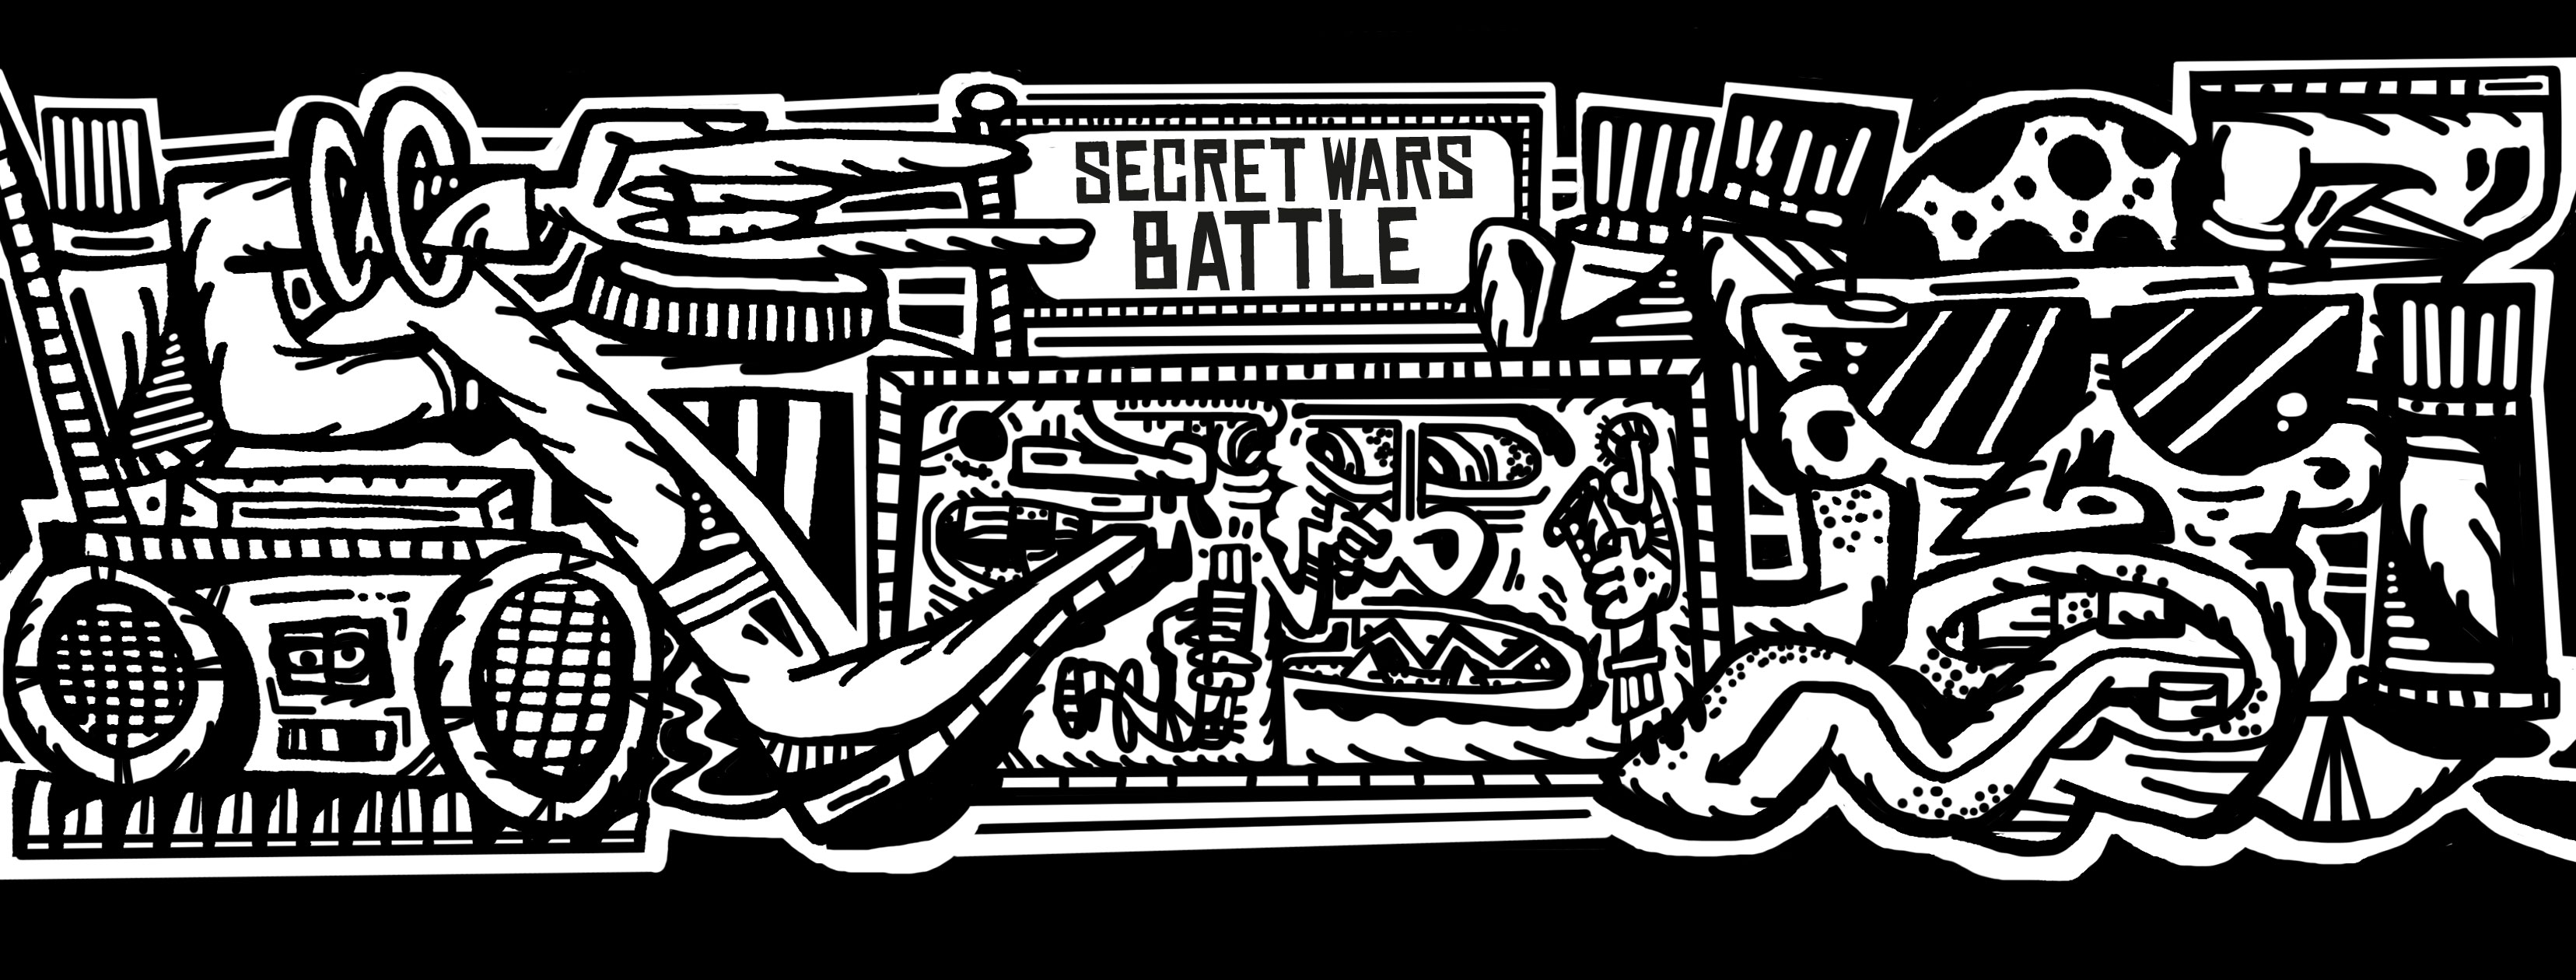 Secret Wars 30 Hamburg